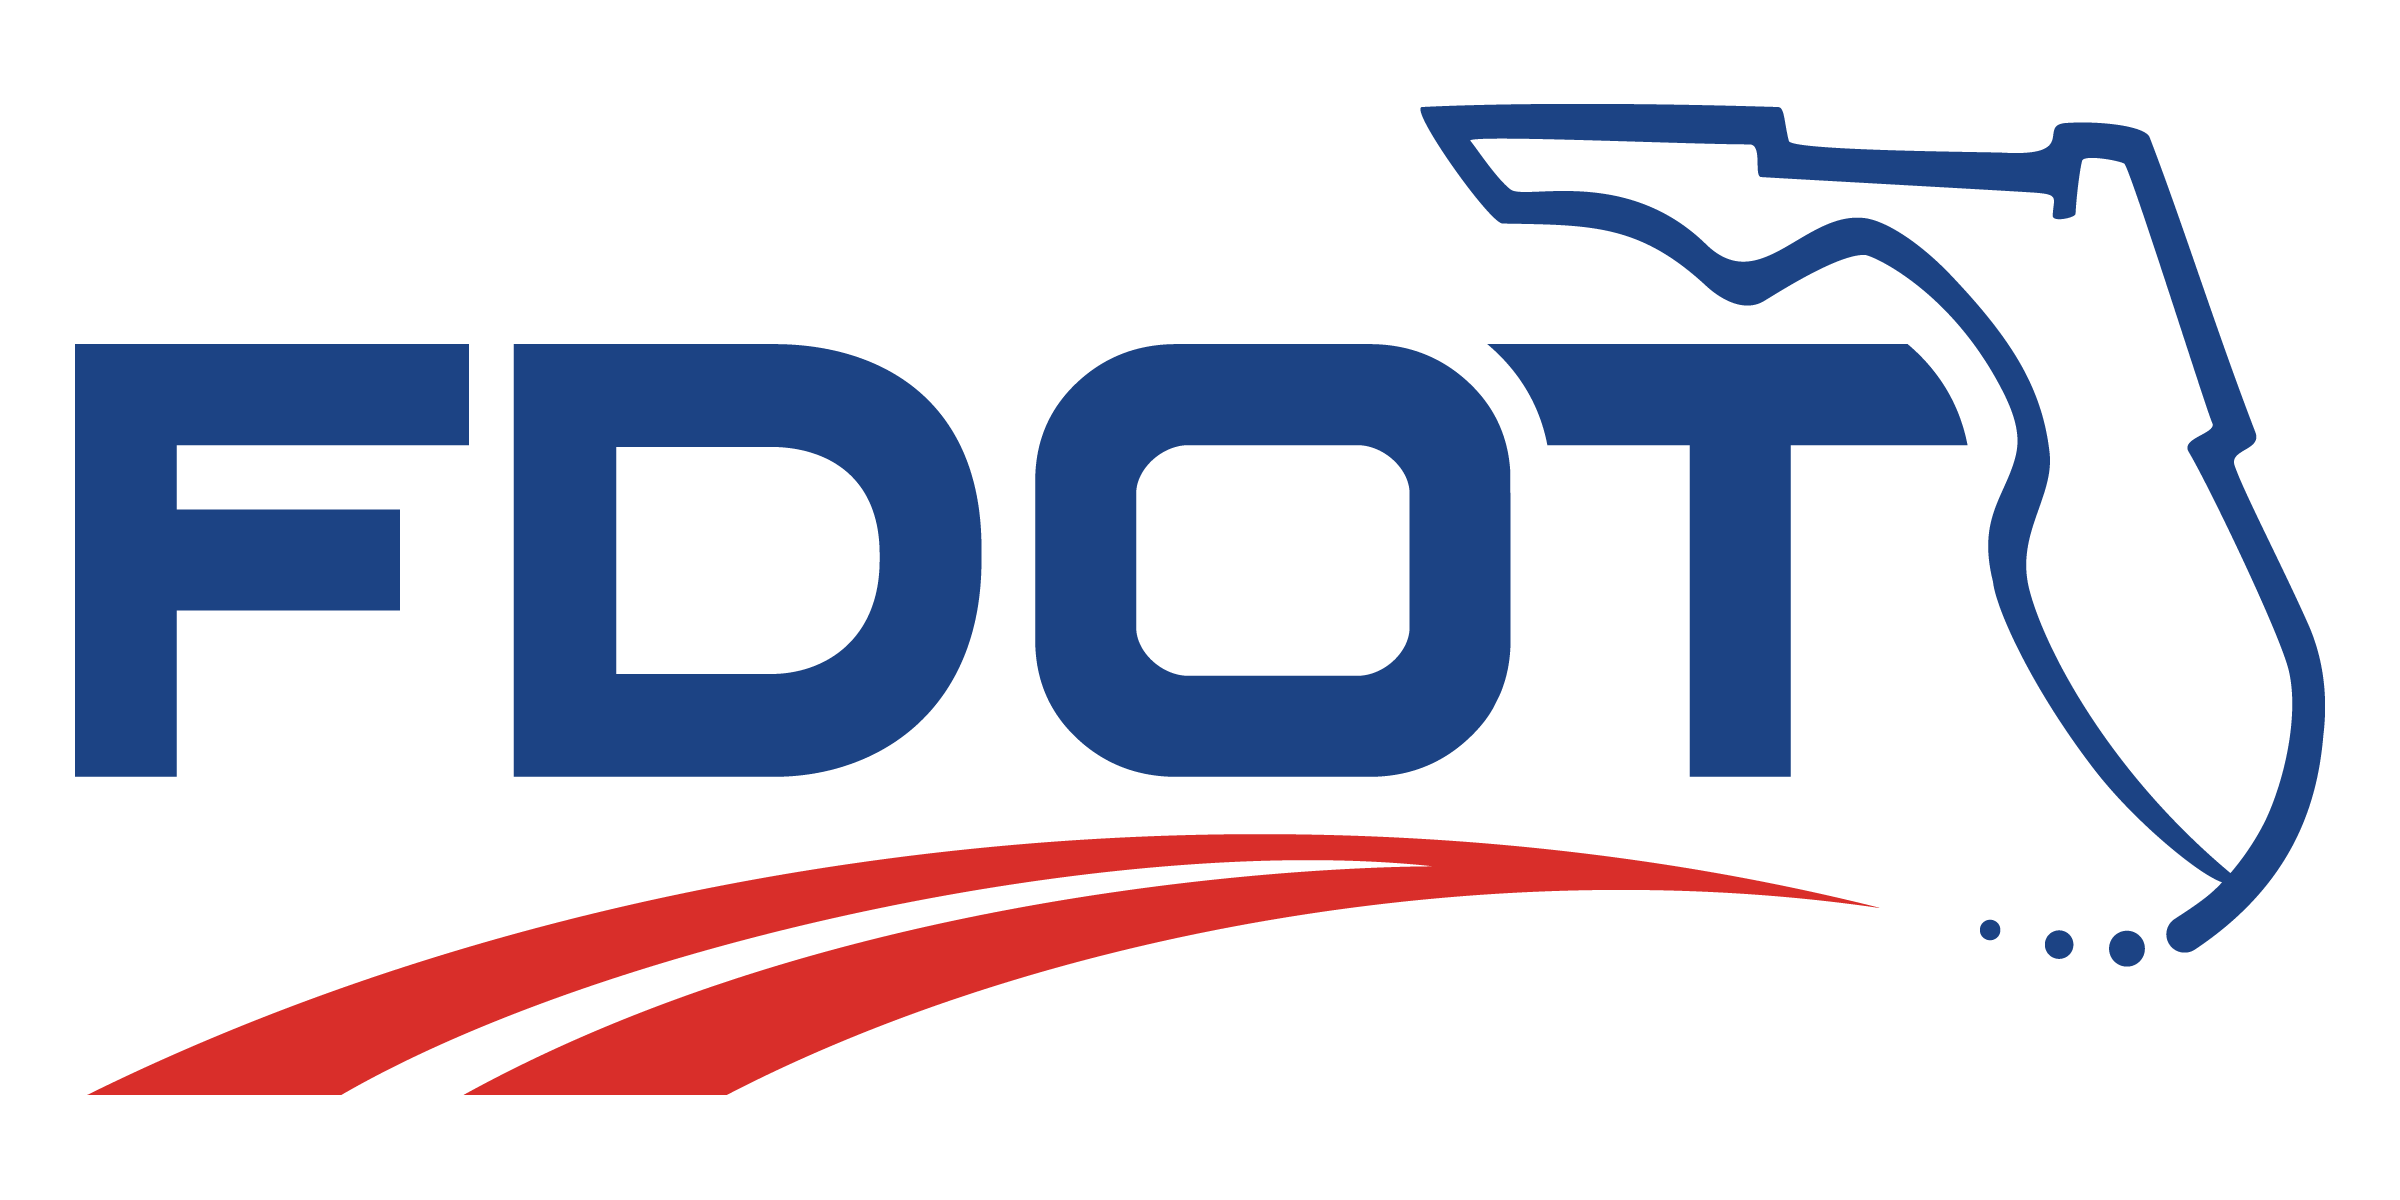 Florida Department of Transportation logo.